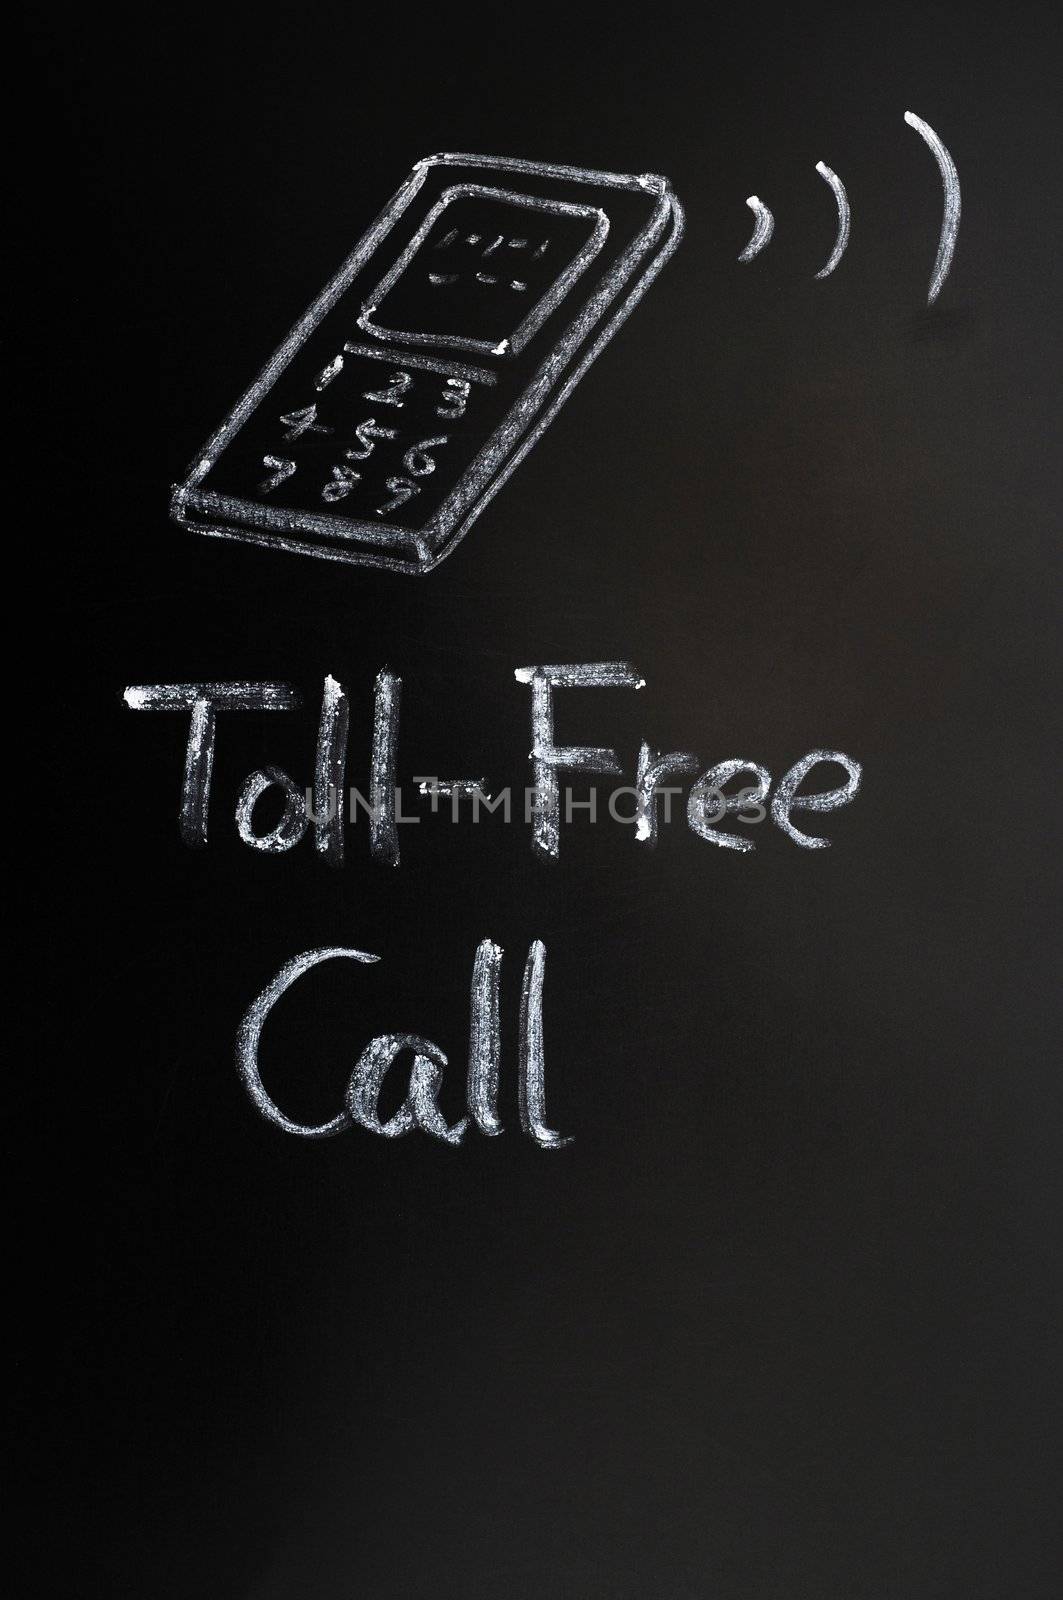 Toll-free call background drawn on a blackboard